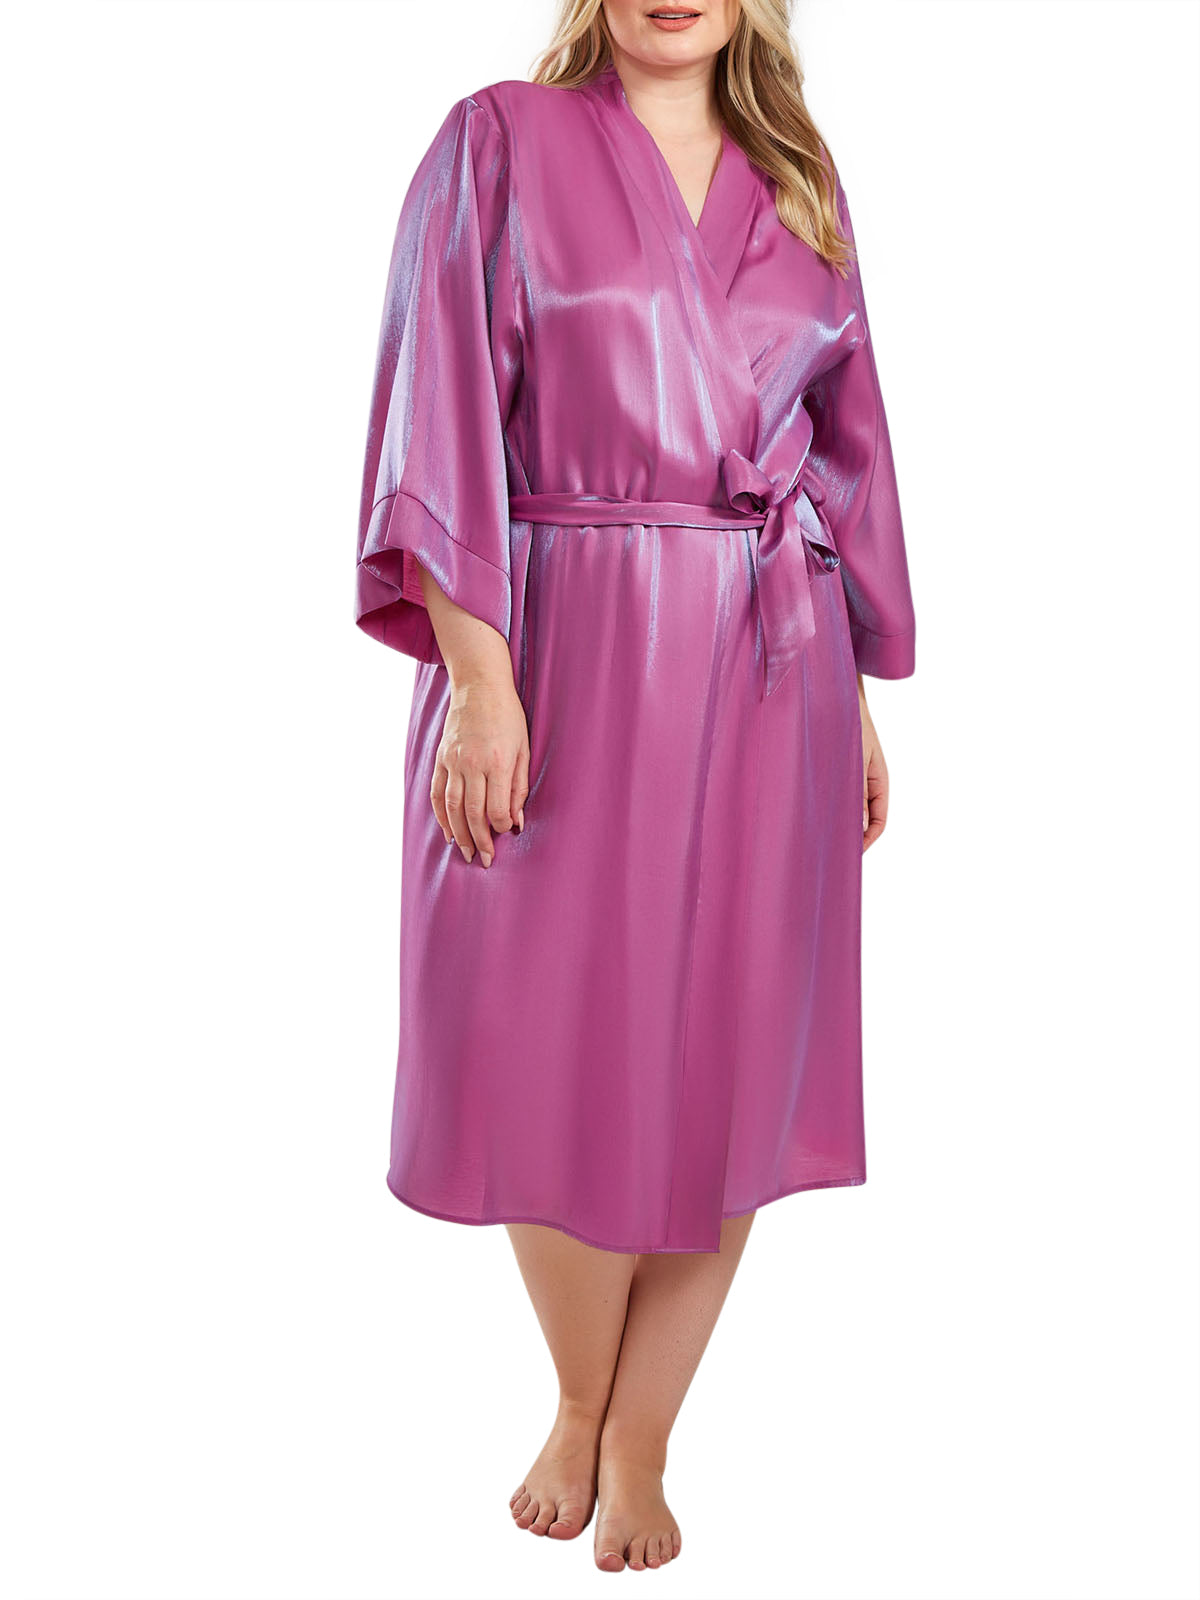 iCollection Robe Women's Janet Plus Size Robe Loungewear